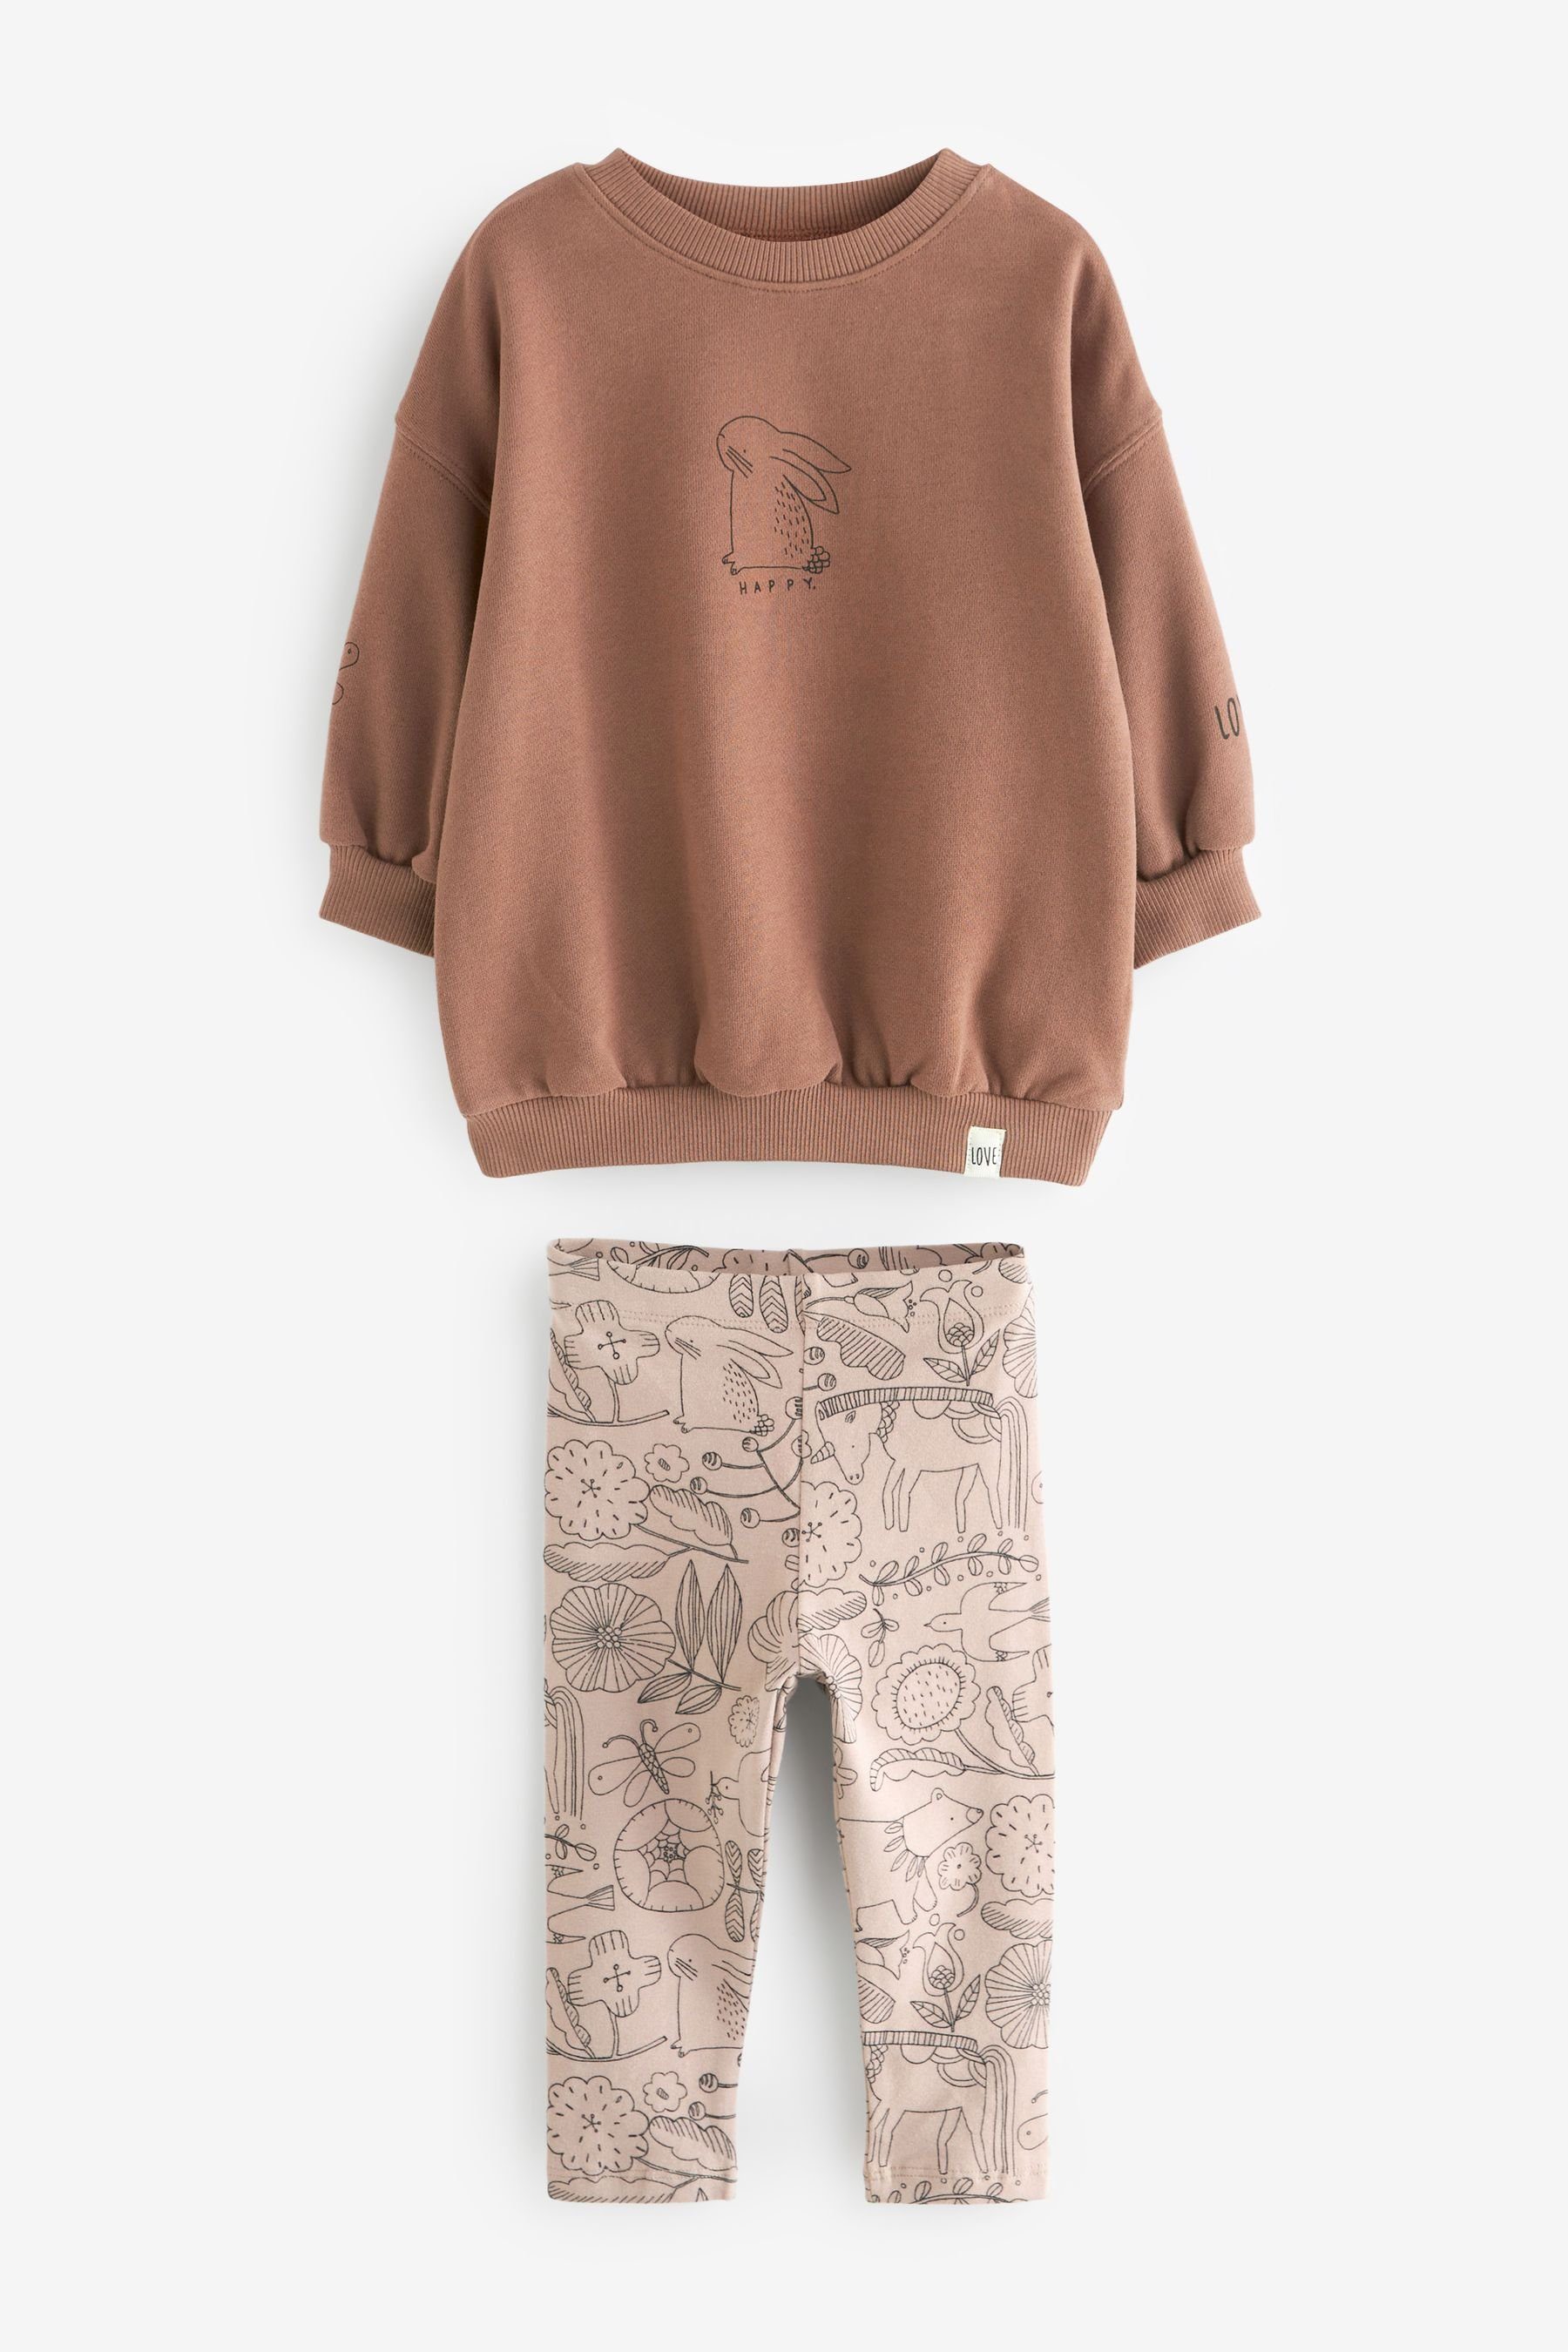 & Bedrucktes Brown und Set (2-tlg) Shirt im Next Sweatshirt Leggings Leggings Bunny